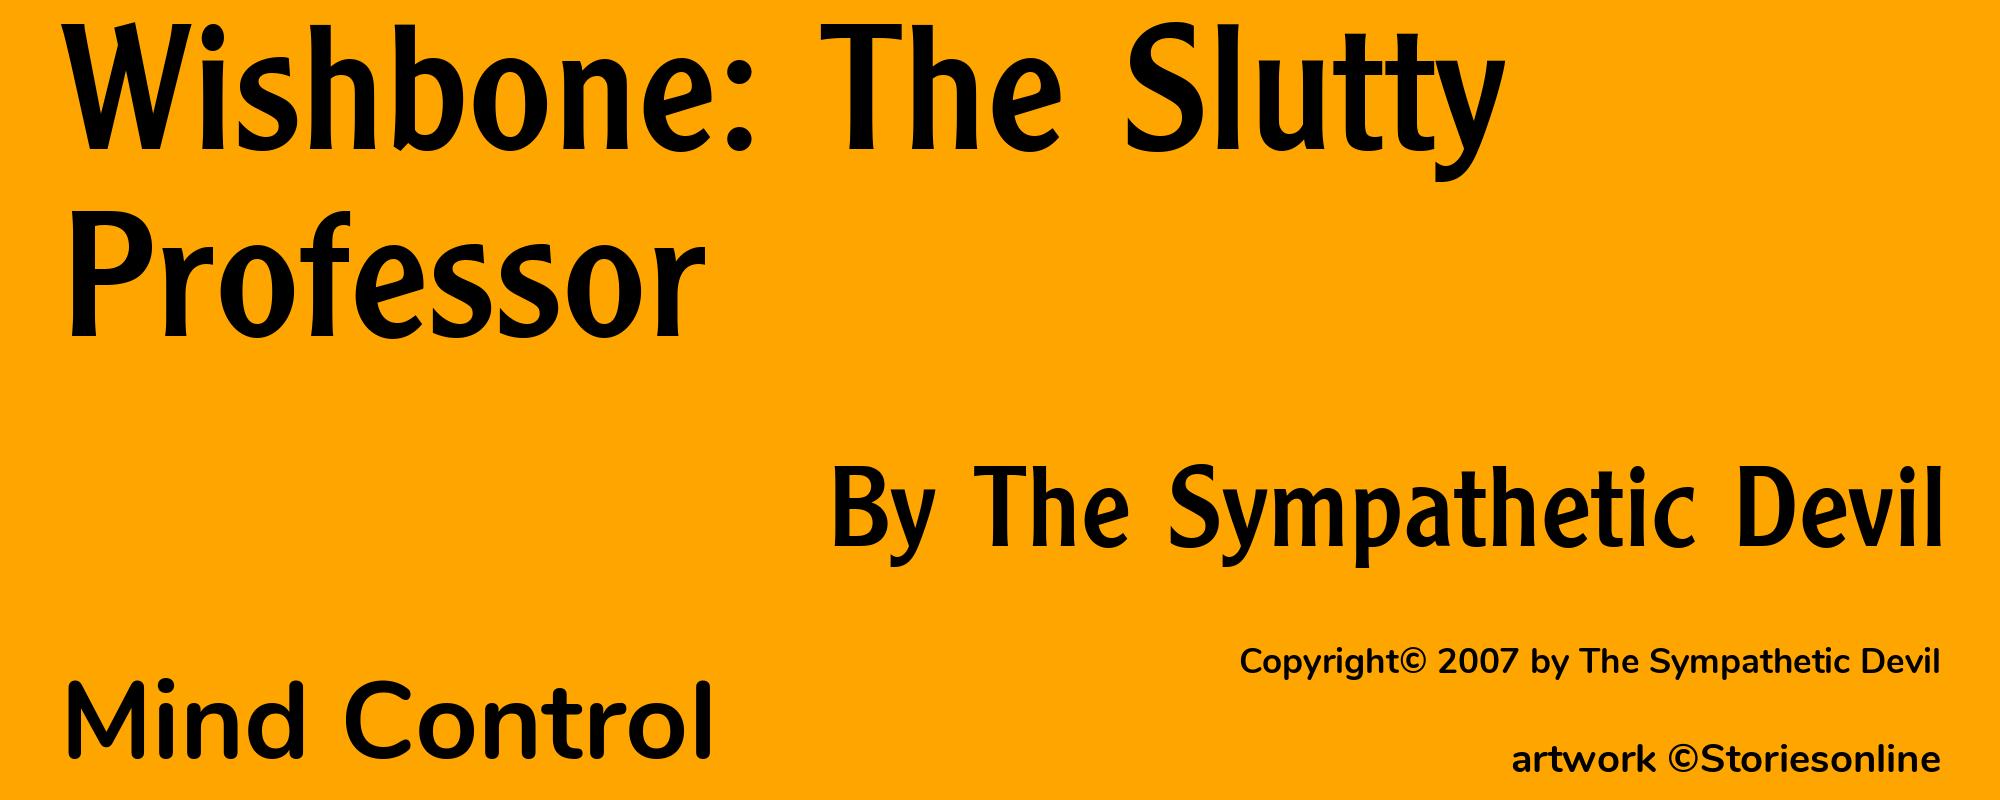 Wishbone: The Slutty Professor - Cover